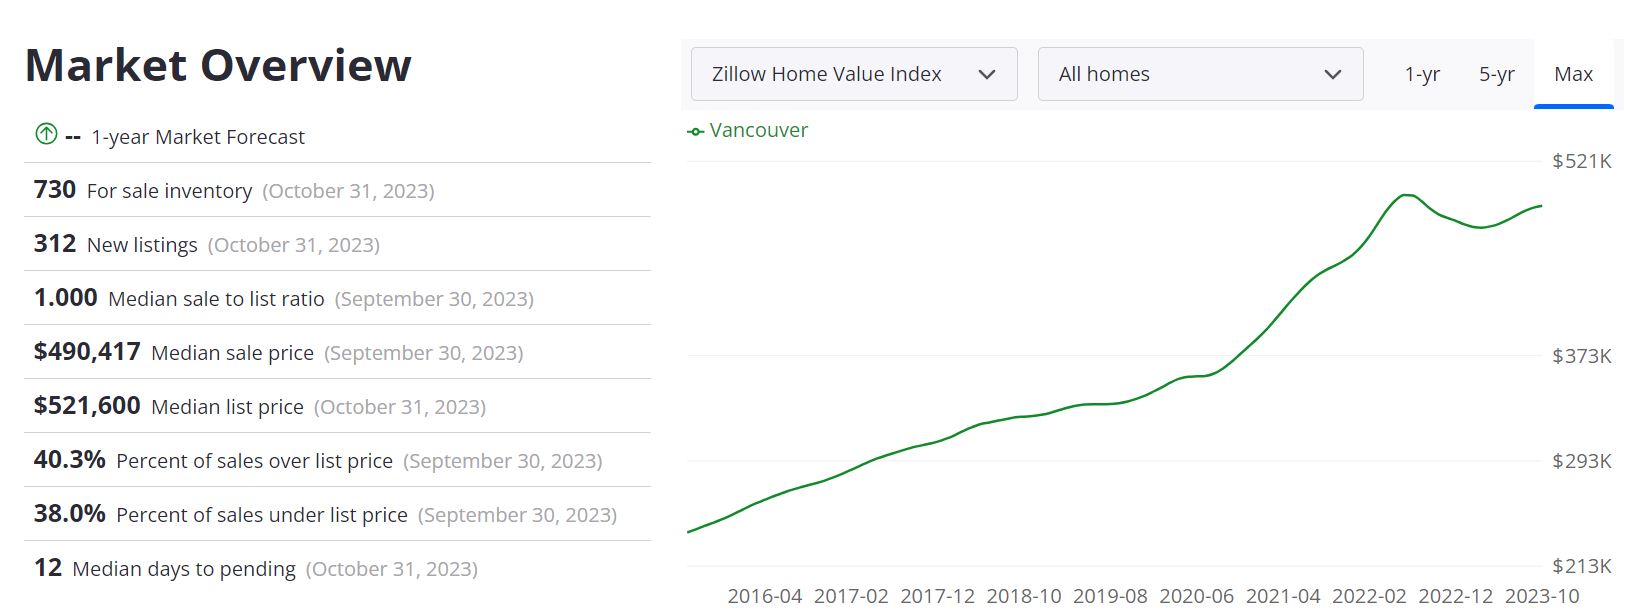 Vancouver Housing Market Forecast 2023-2024 